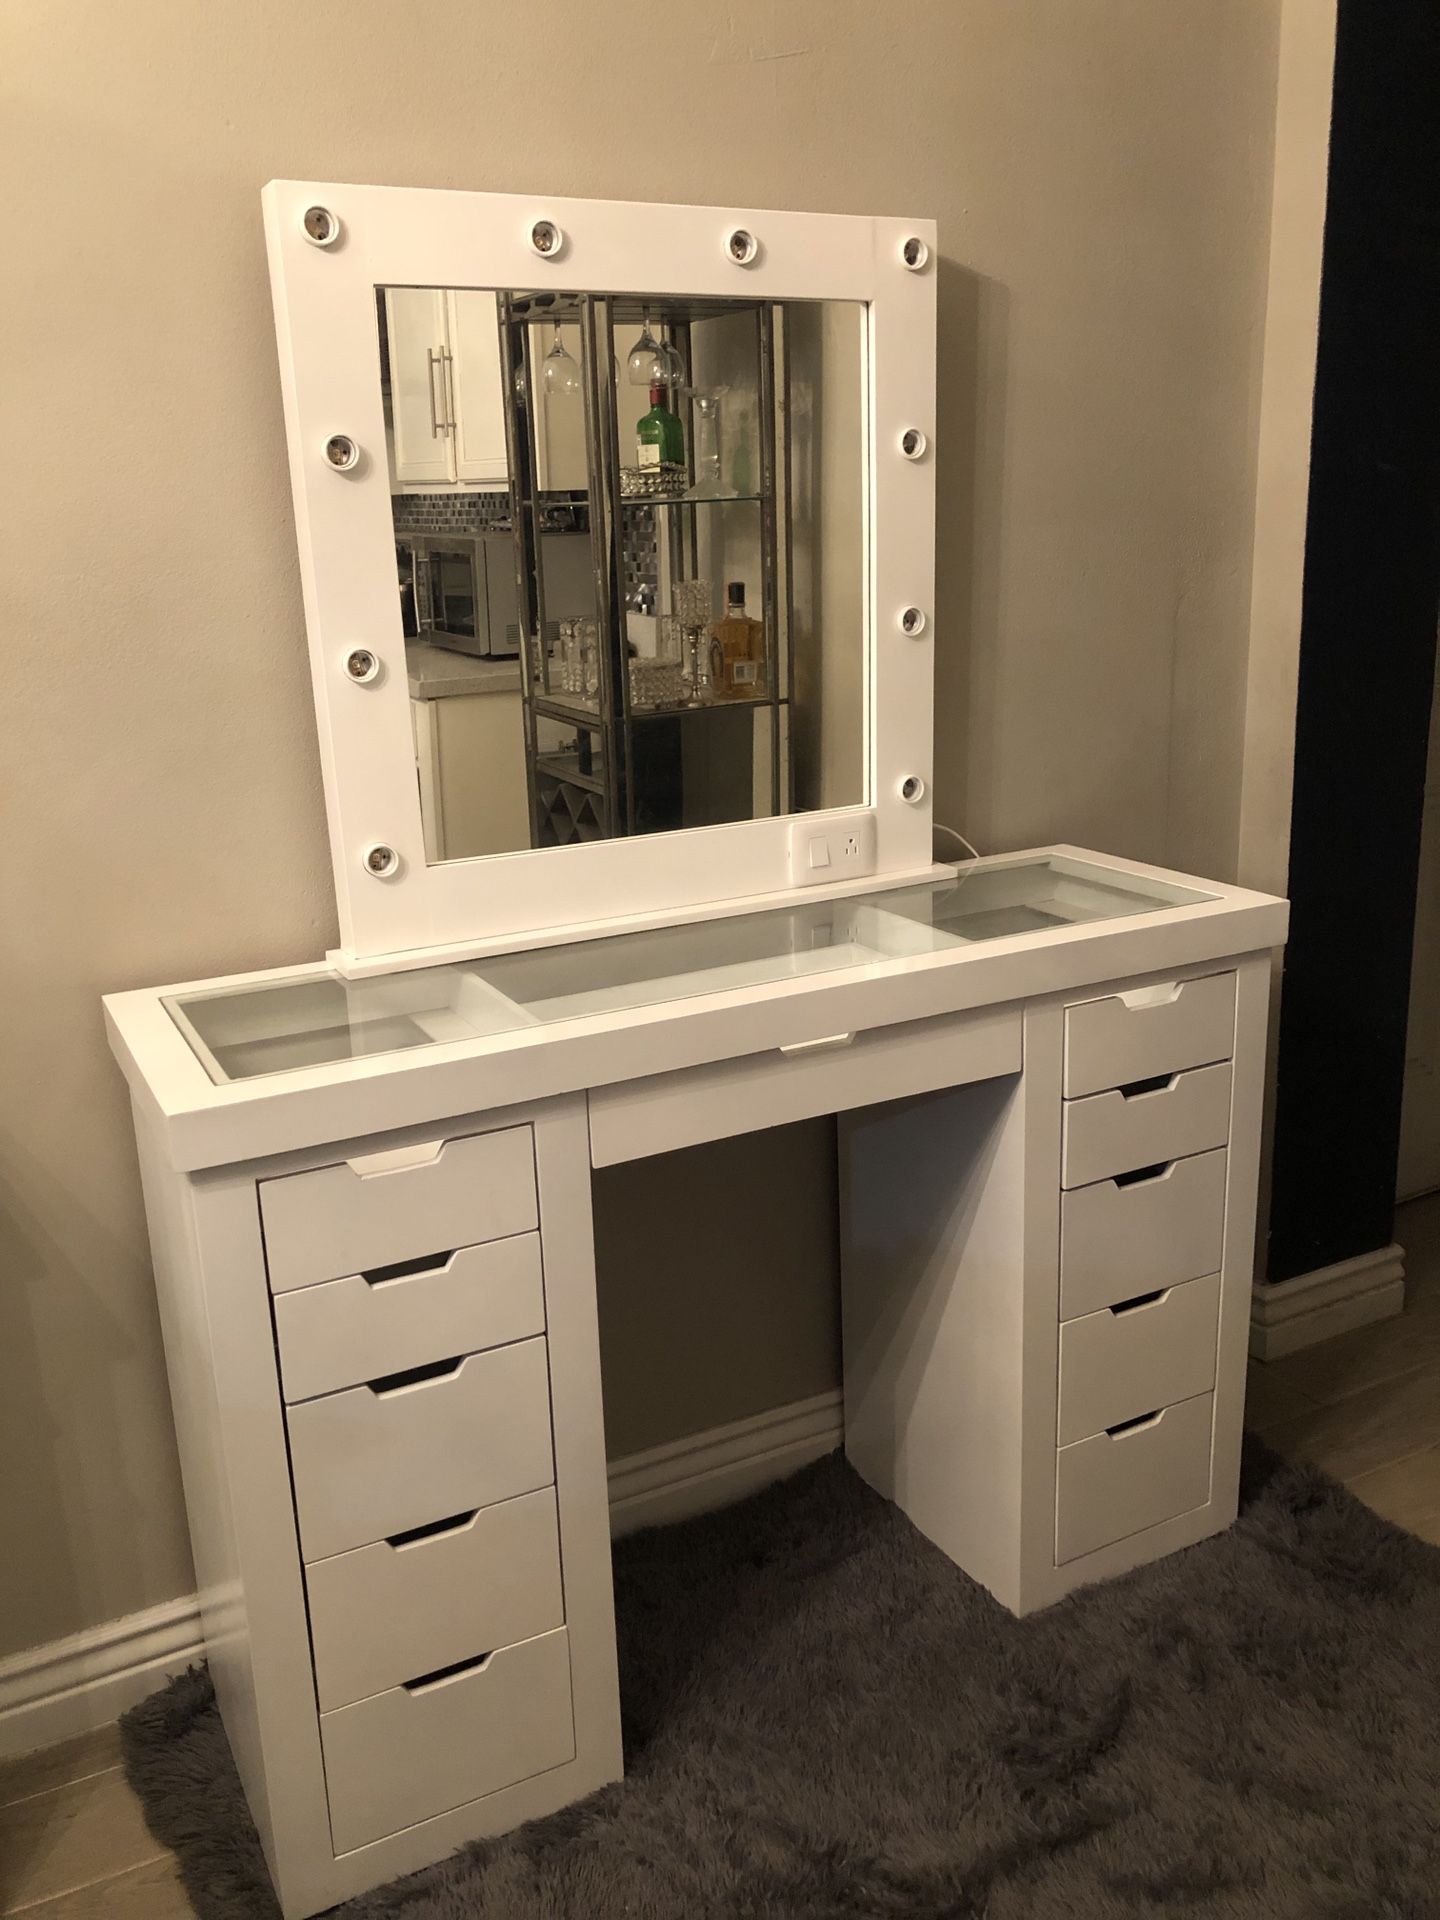 Vanity desk with mirror